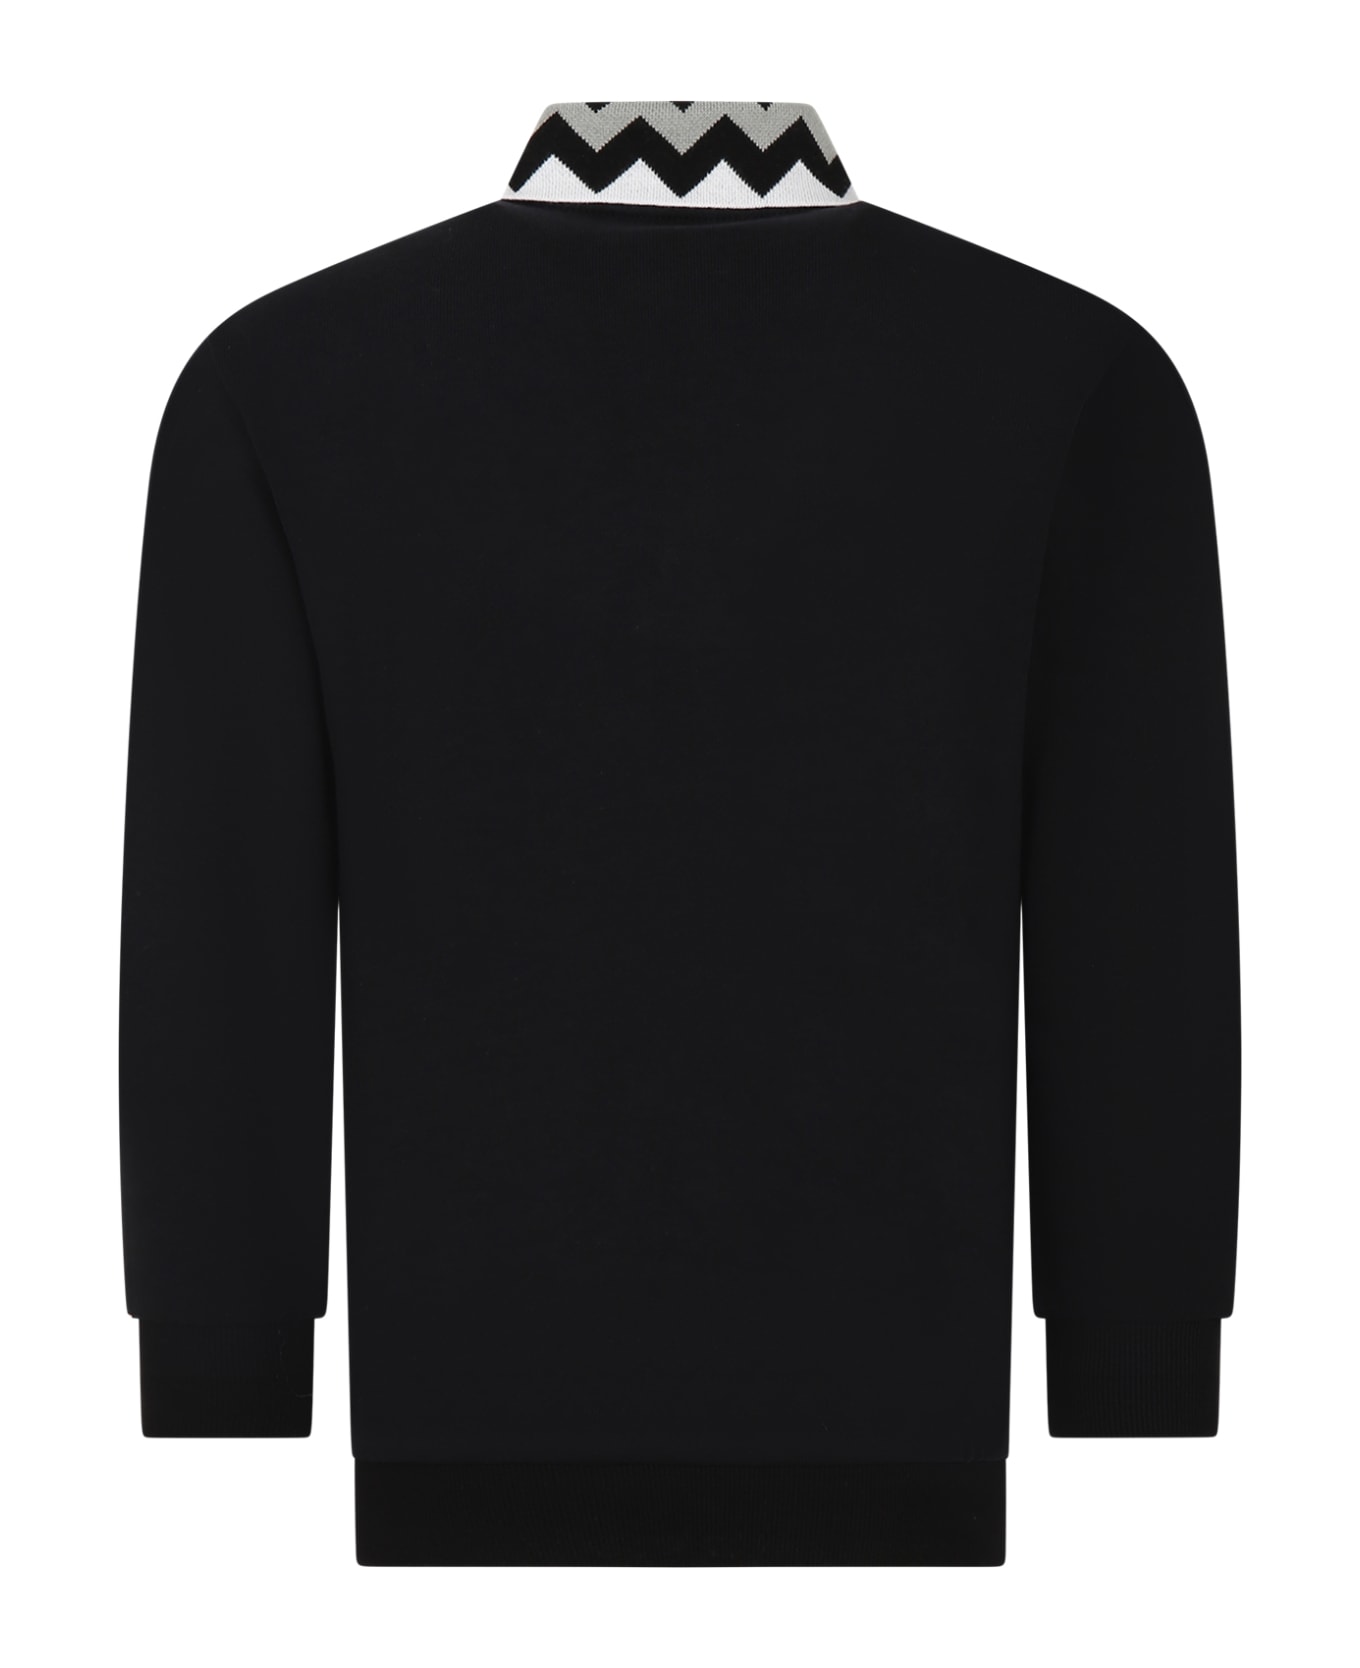 Missoni Kids Black Sweatshirt For Boy With Logo - Black